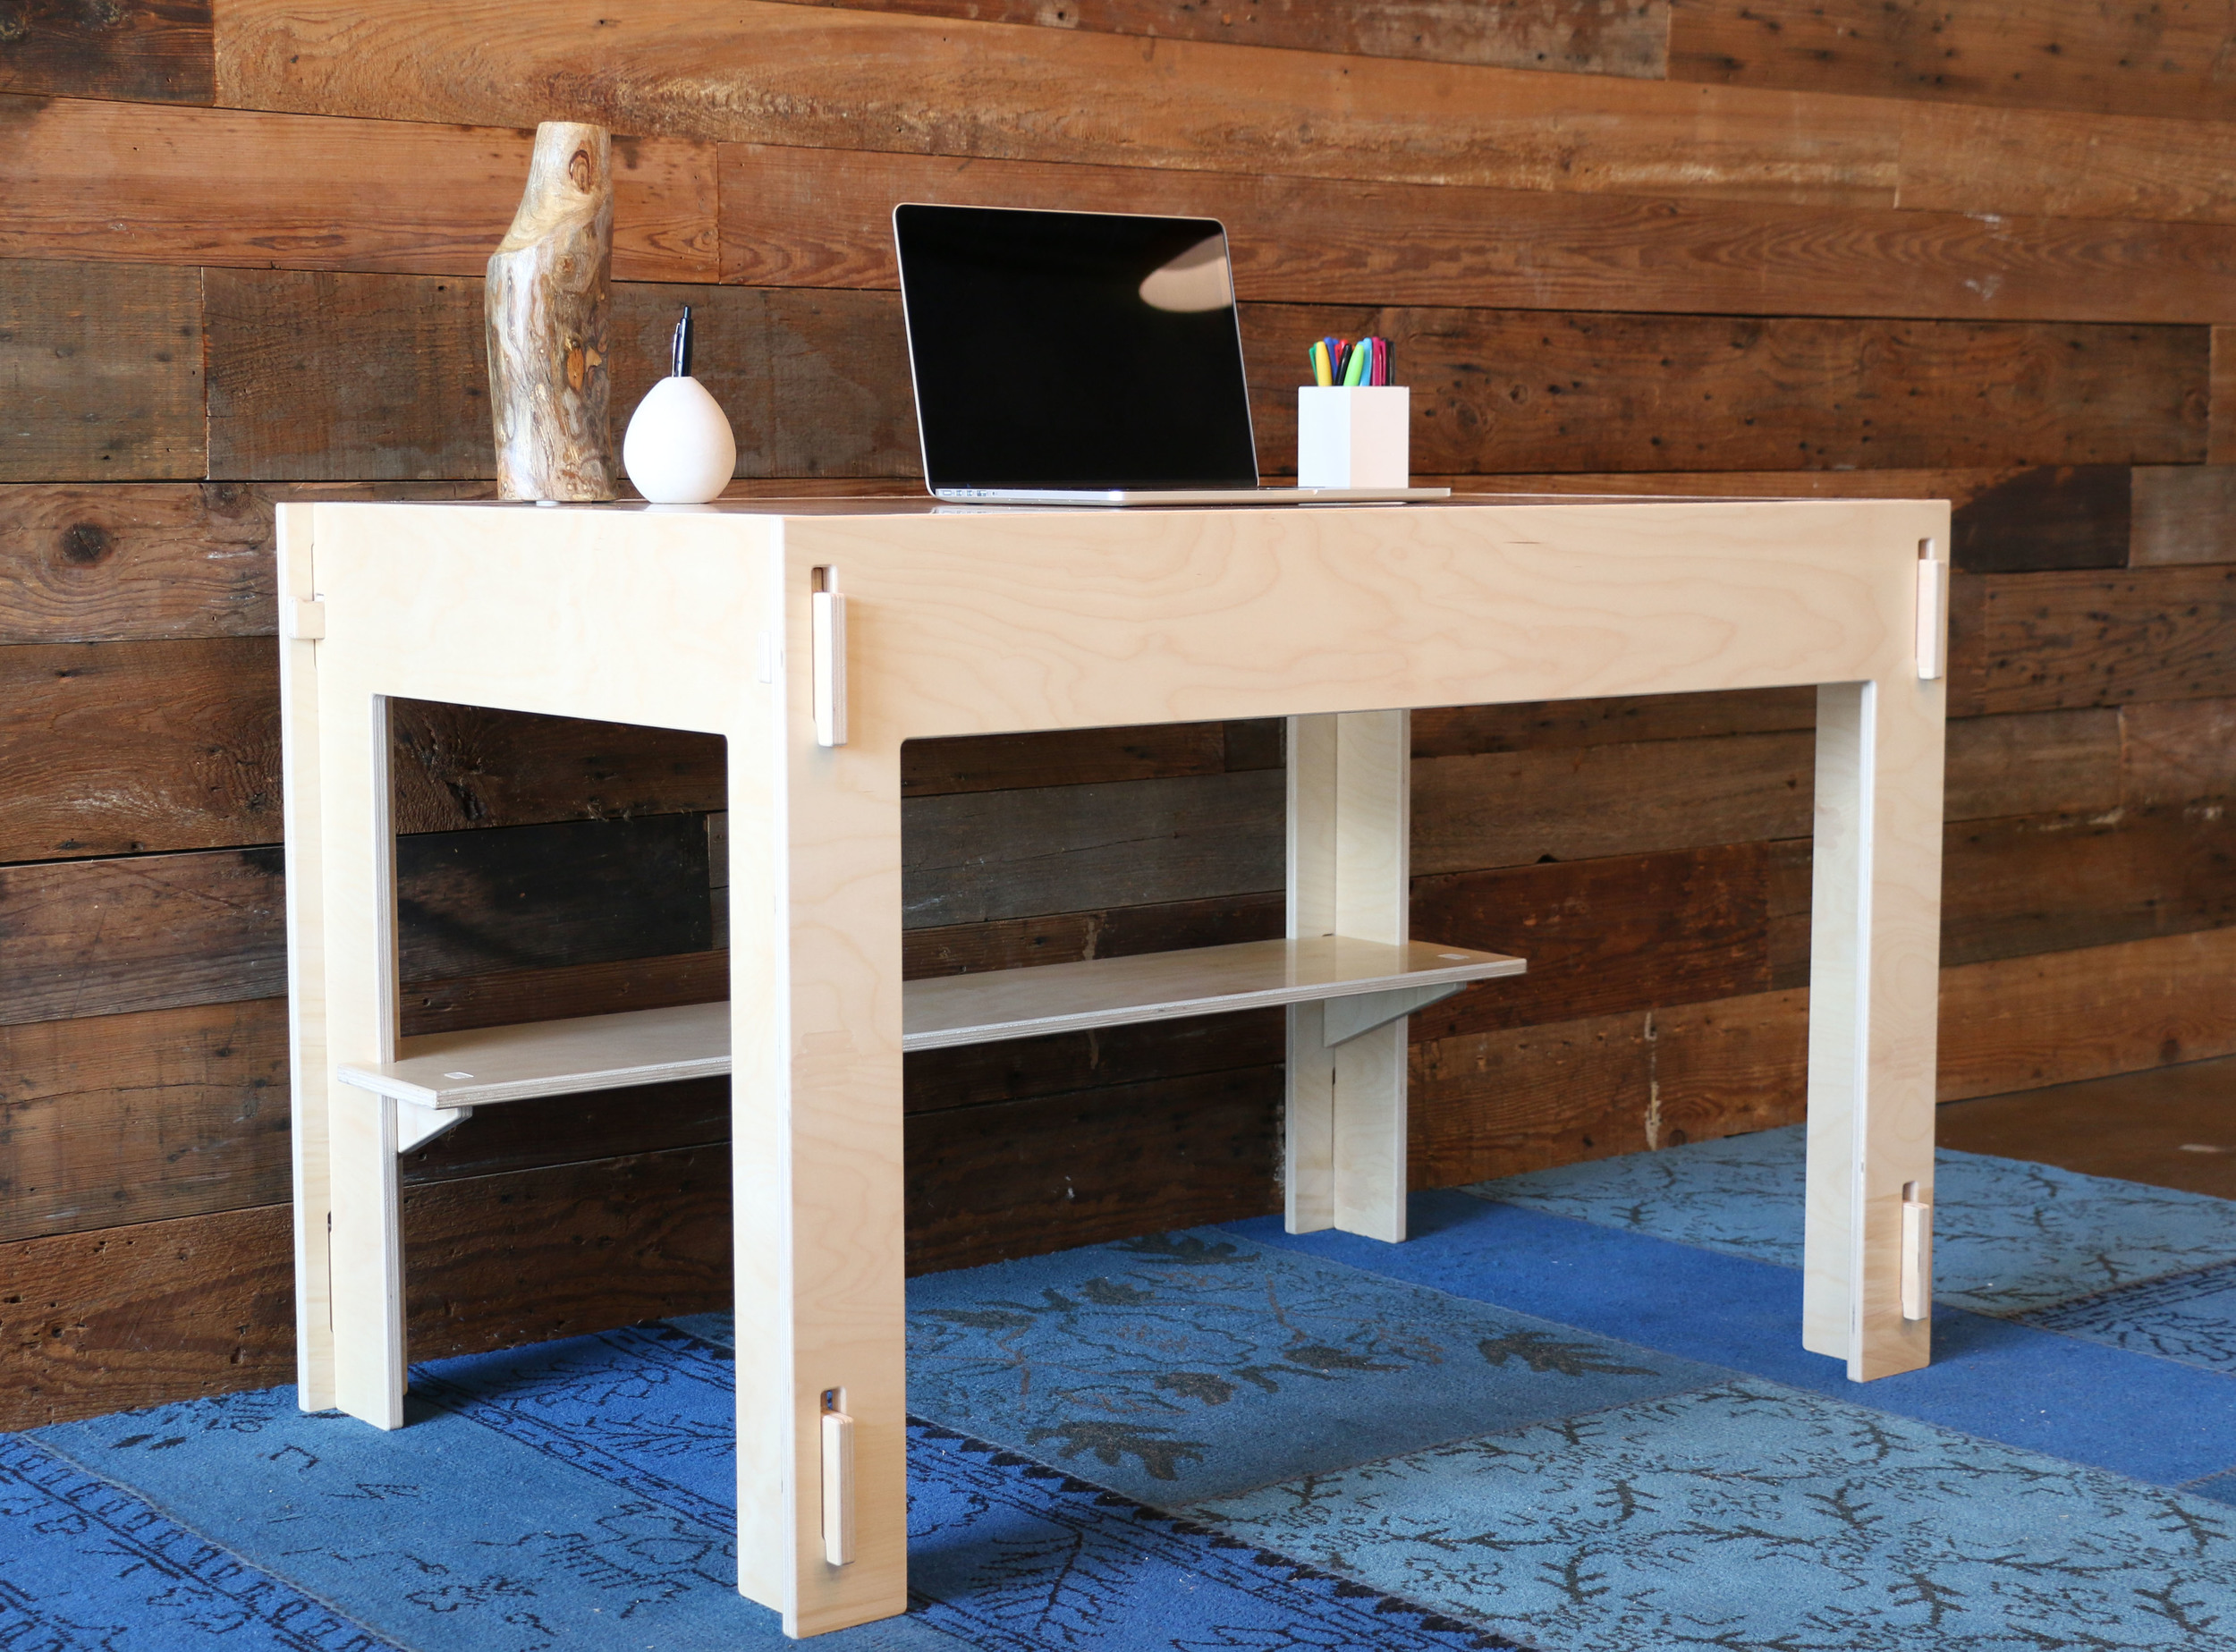  Storage-Top Desk for Mac with 15" MacBook Pro 